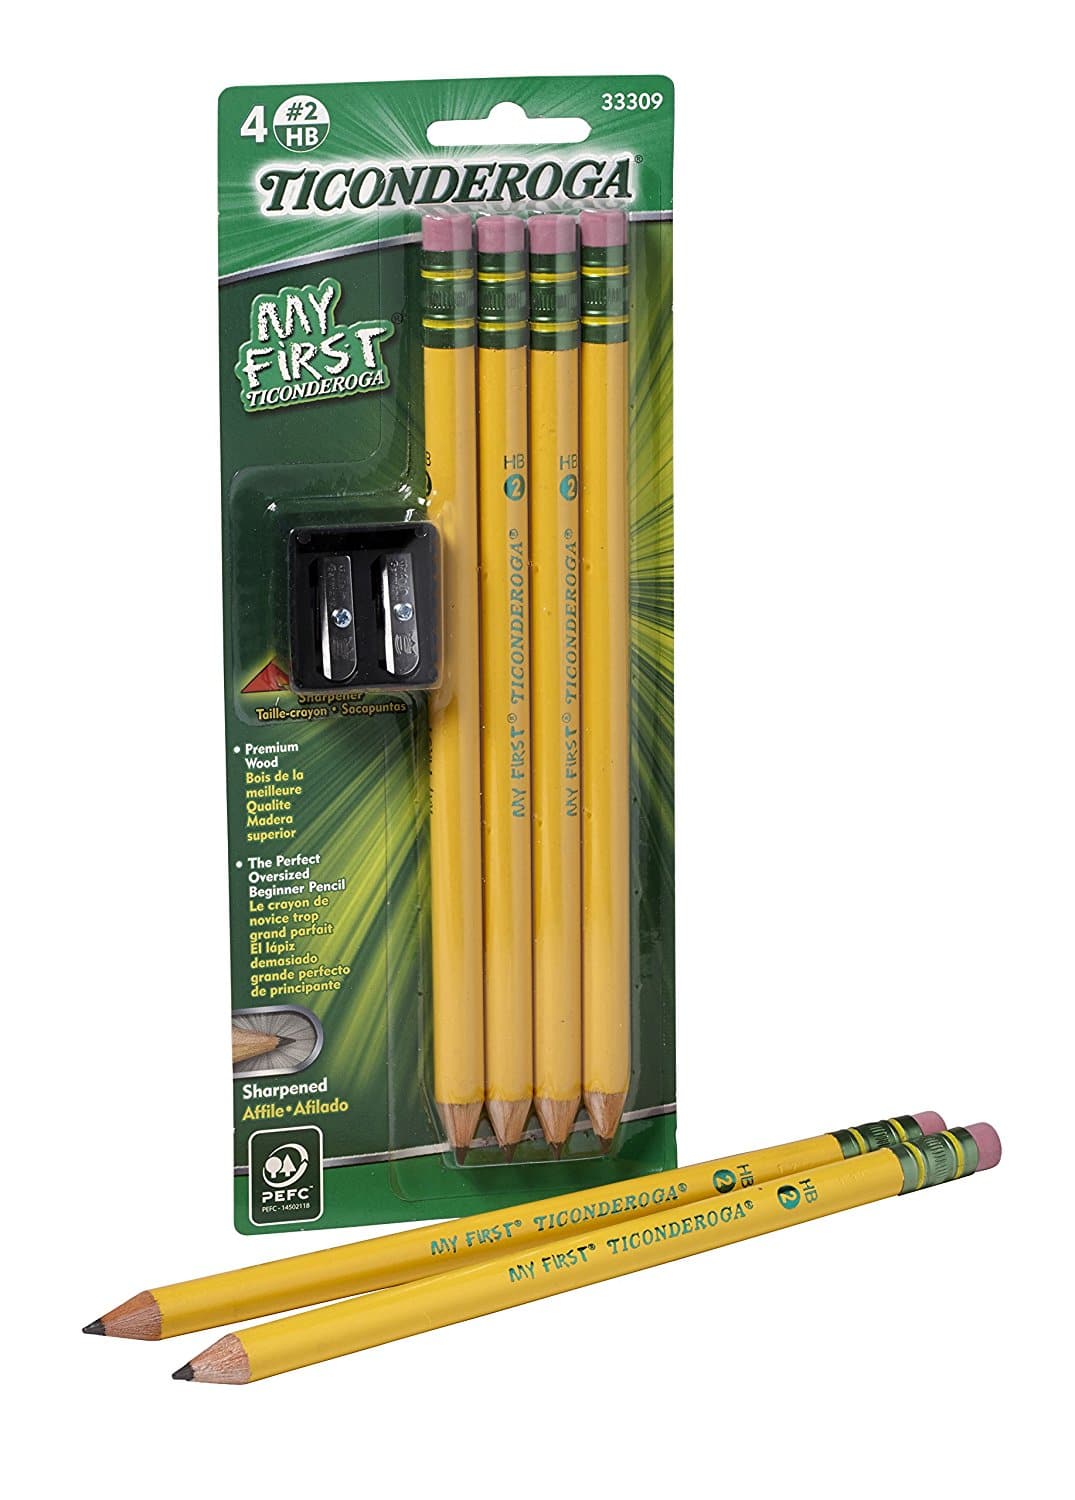 DEAL ALERT: My First Ticonderoga Primary Size #2 Beginner Pencils – 40% off!